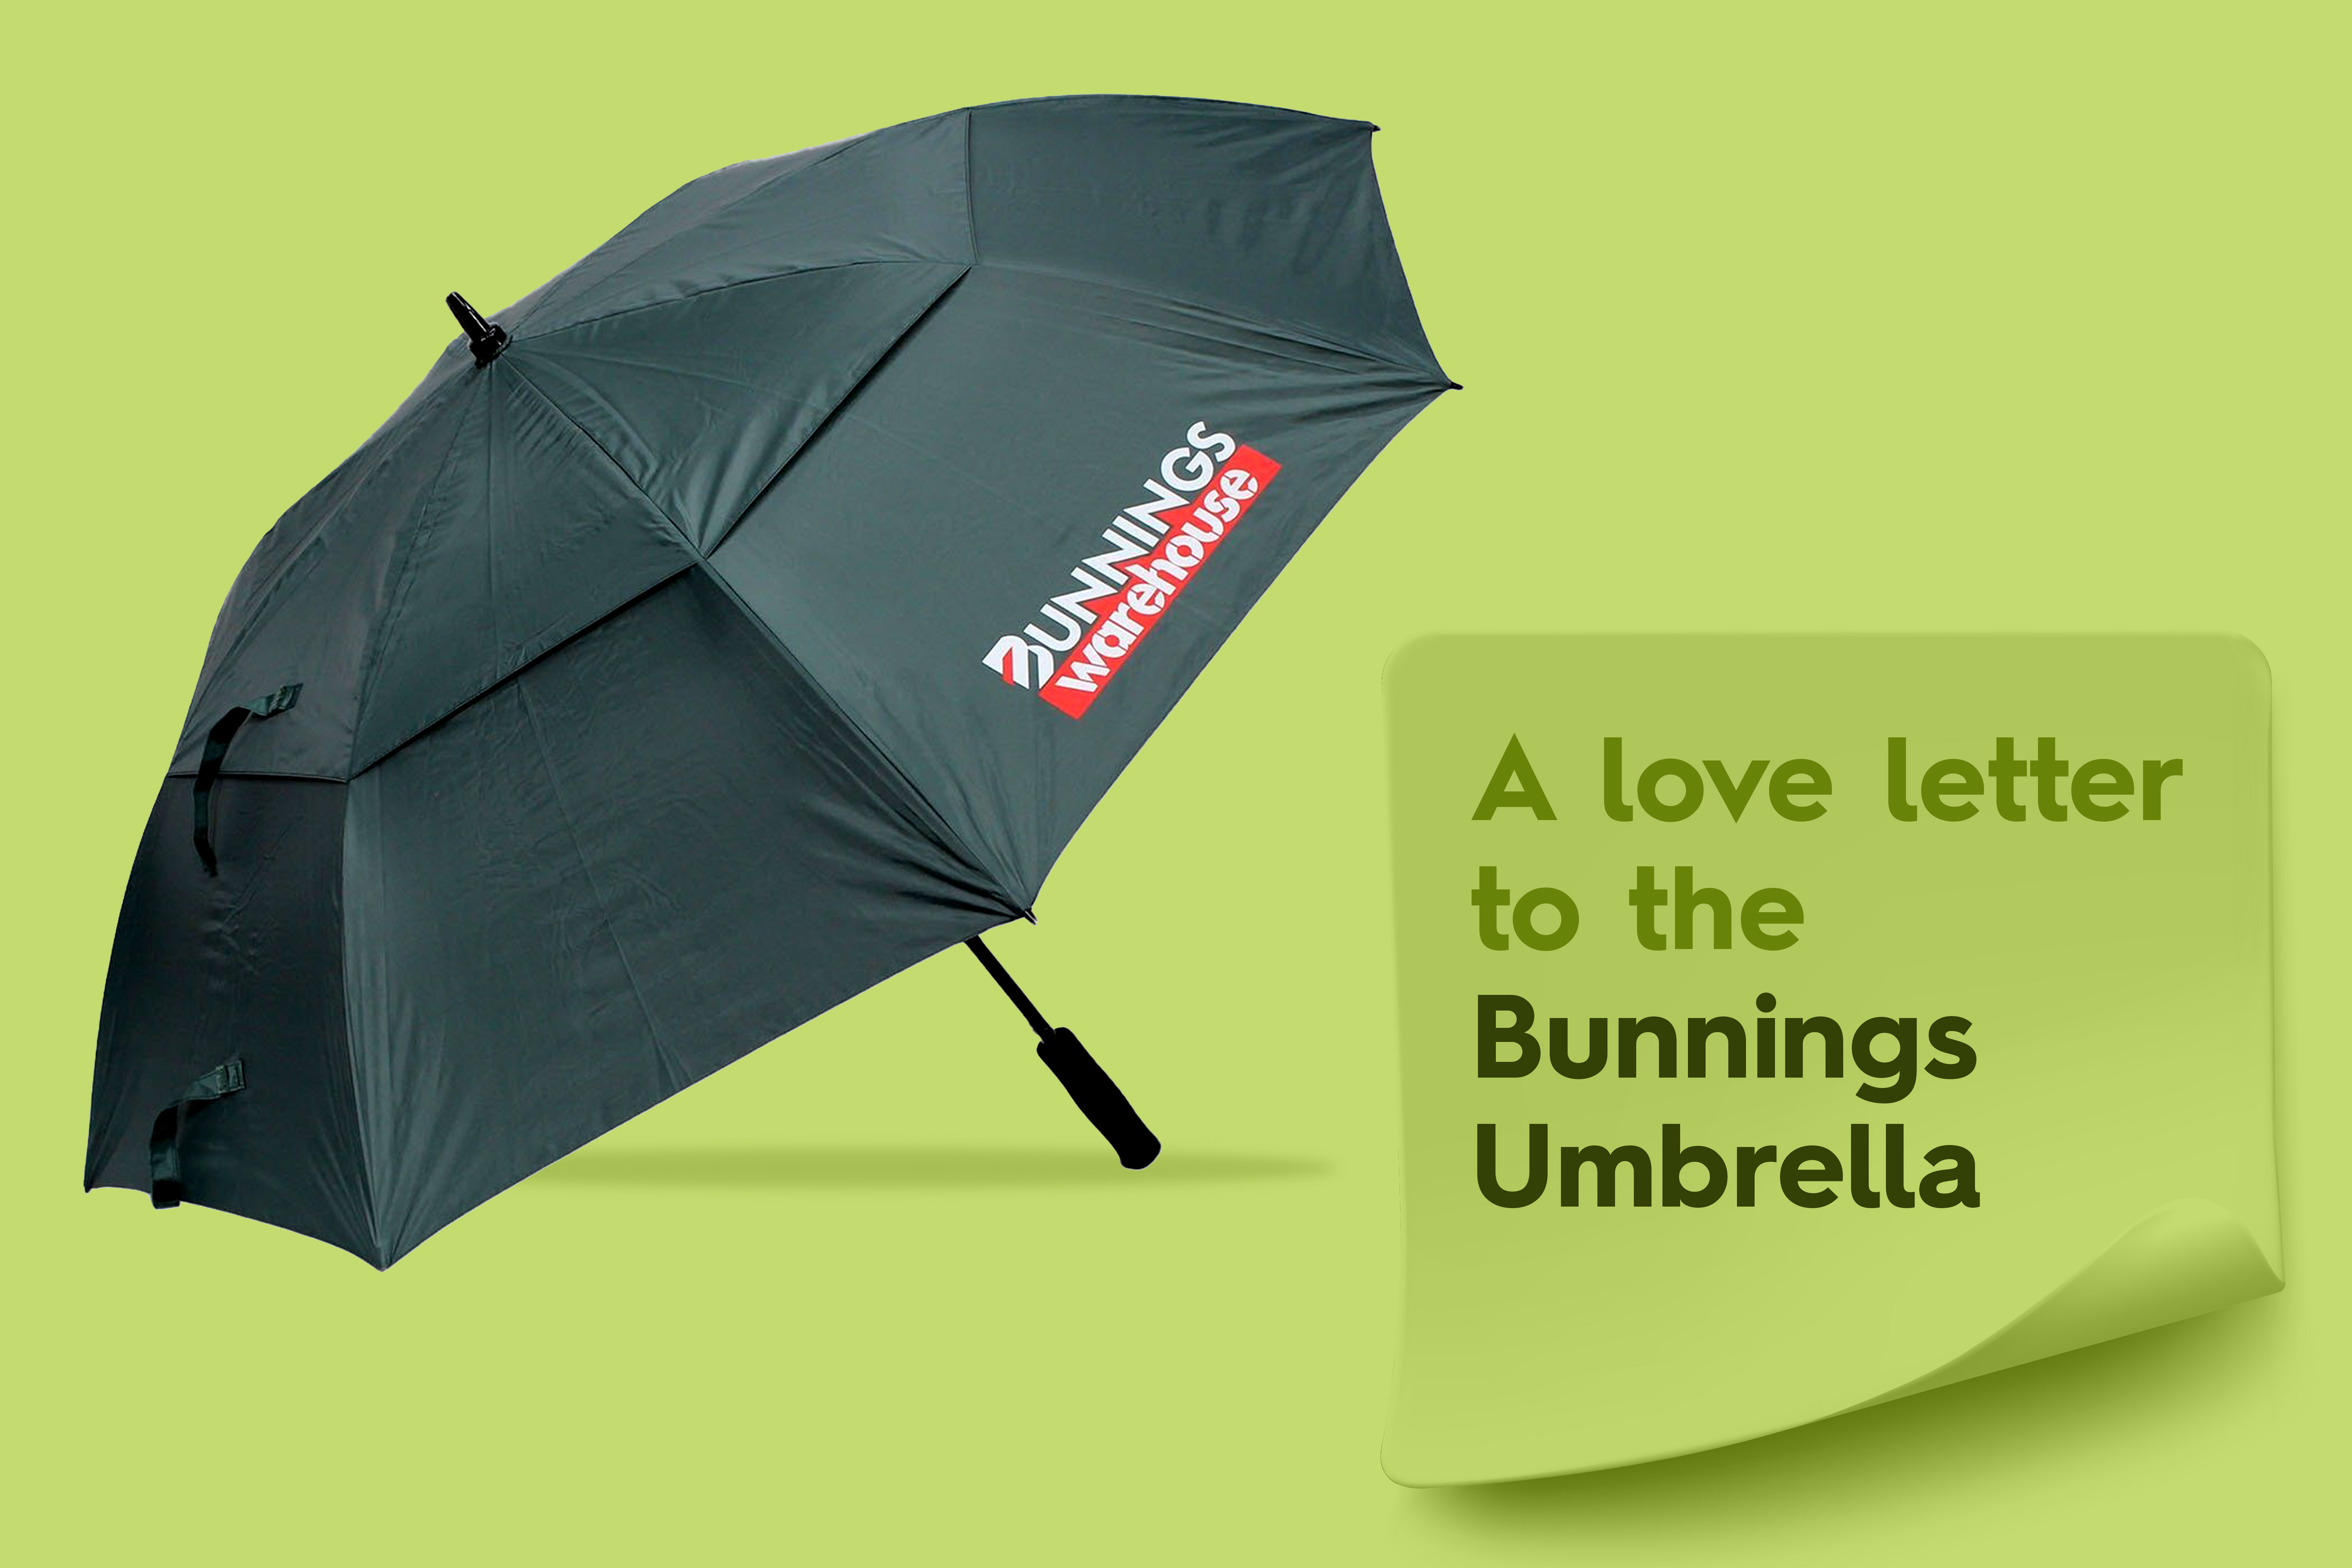 Good Things loves the Bunnings umbrella